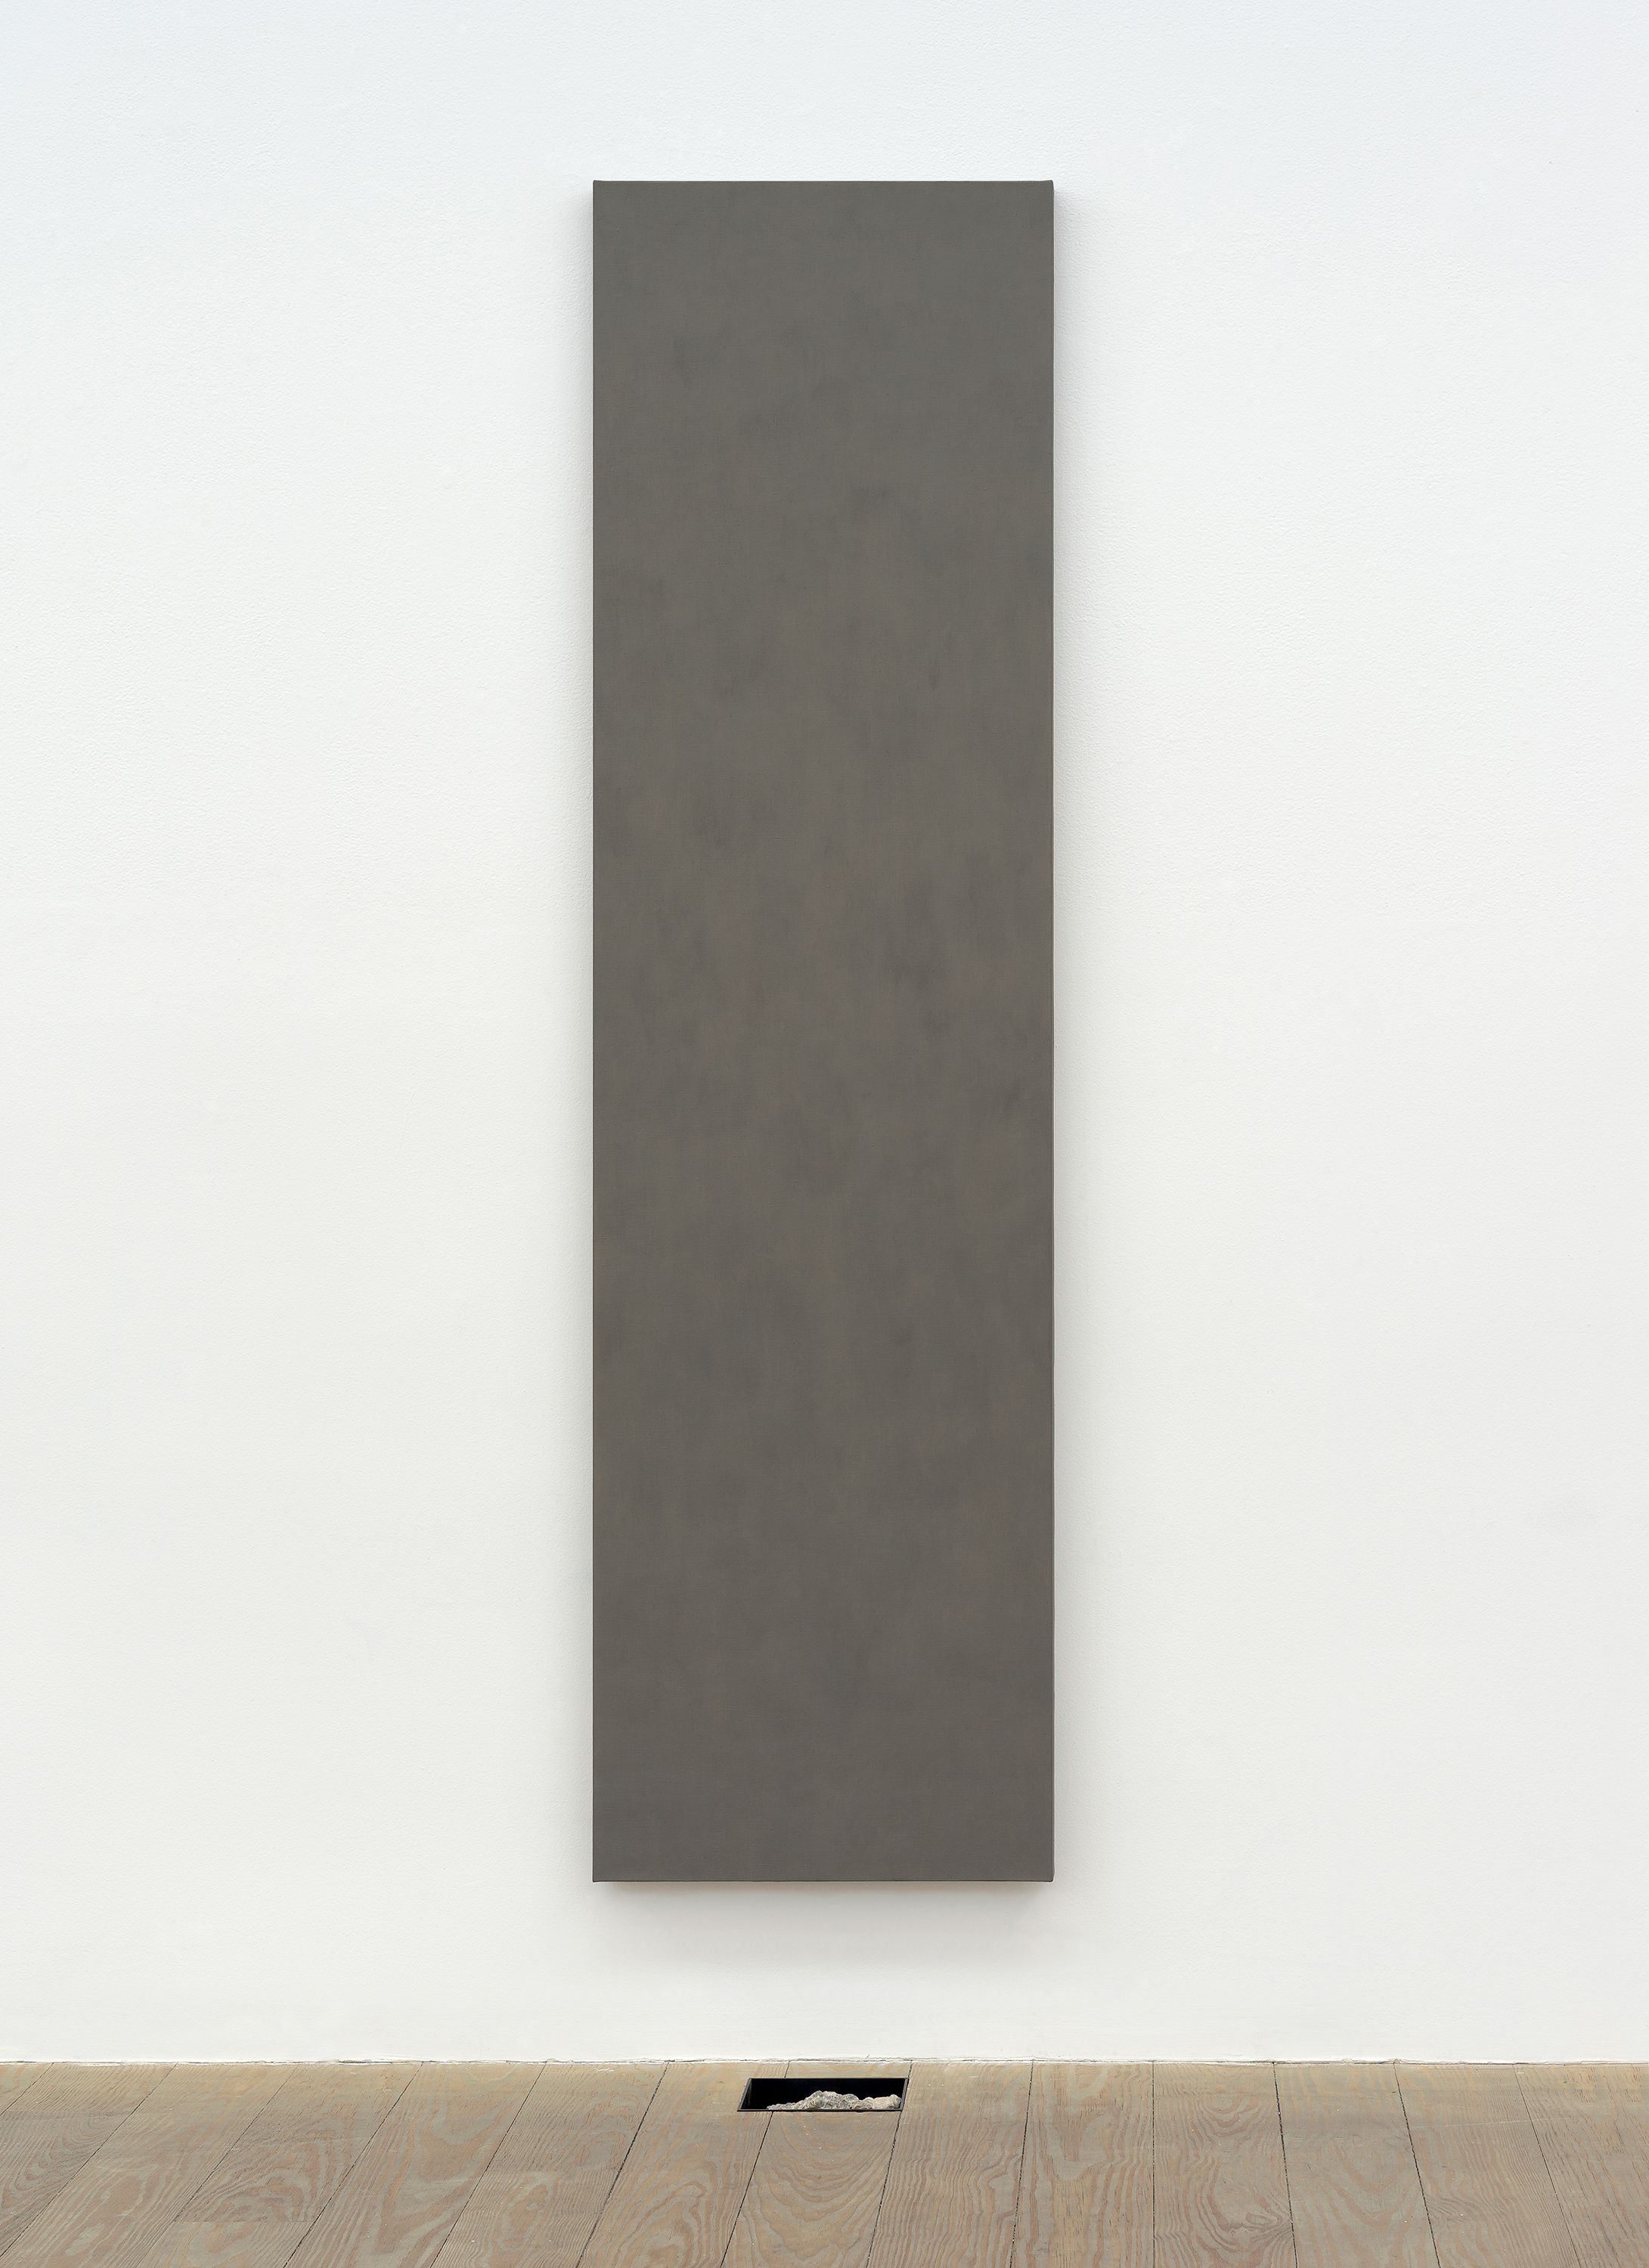 Michael Wang, Milan, 2015, Milan conglomerate, binder, linen, 70 x 19 and 6 3/8 x 4 1/8 x 3 1/8 in.